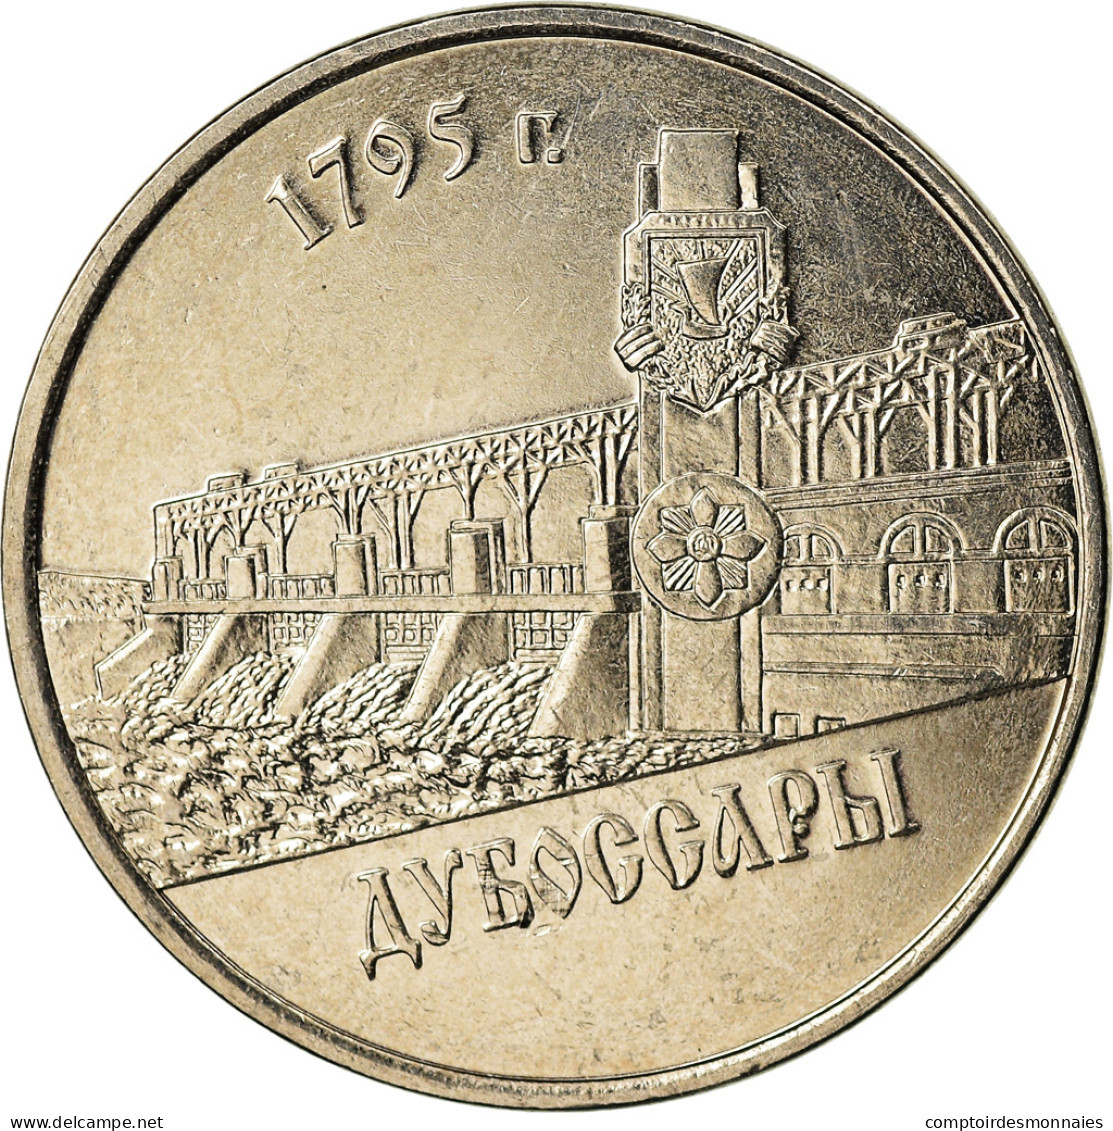 Monnaie, Transnistrie, Rouble, 2014, Dubossary, SPL, Nickel Plated Steel - Moldavië